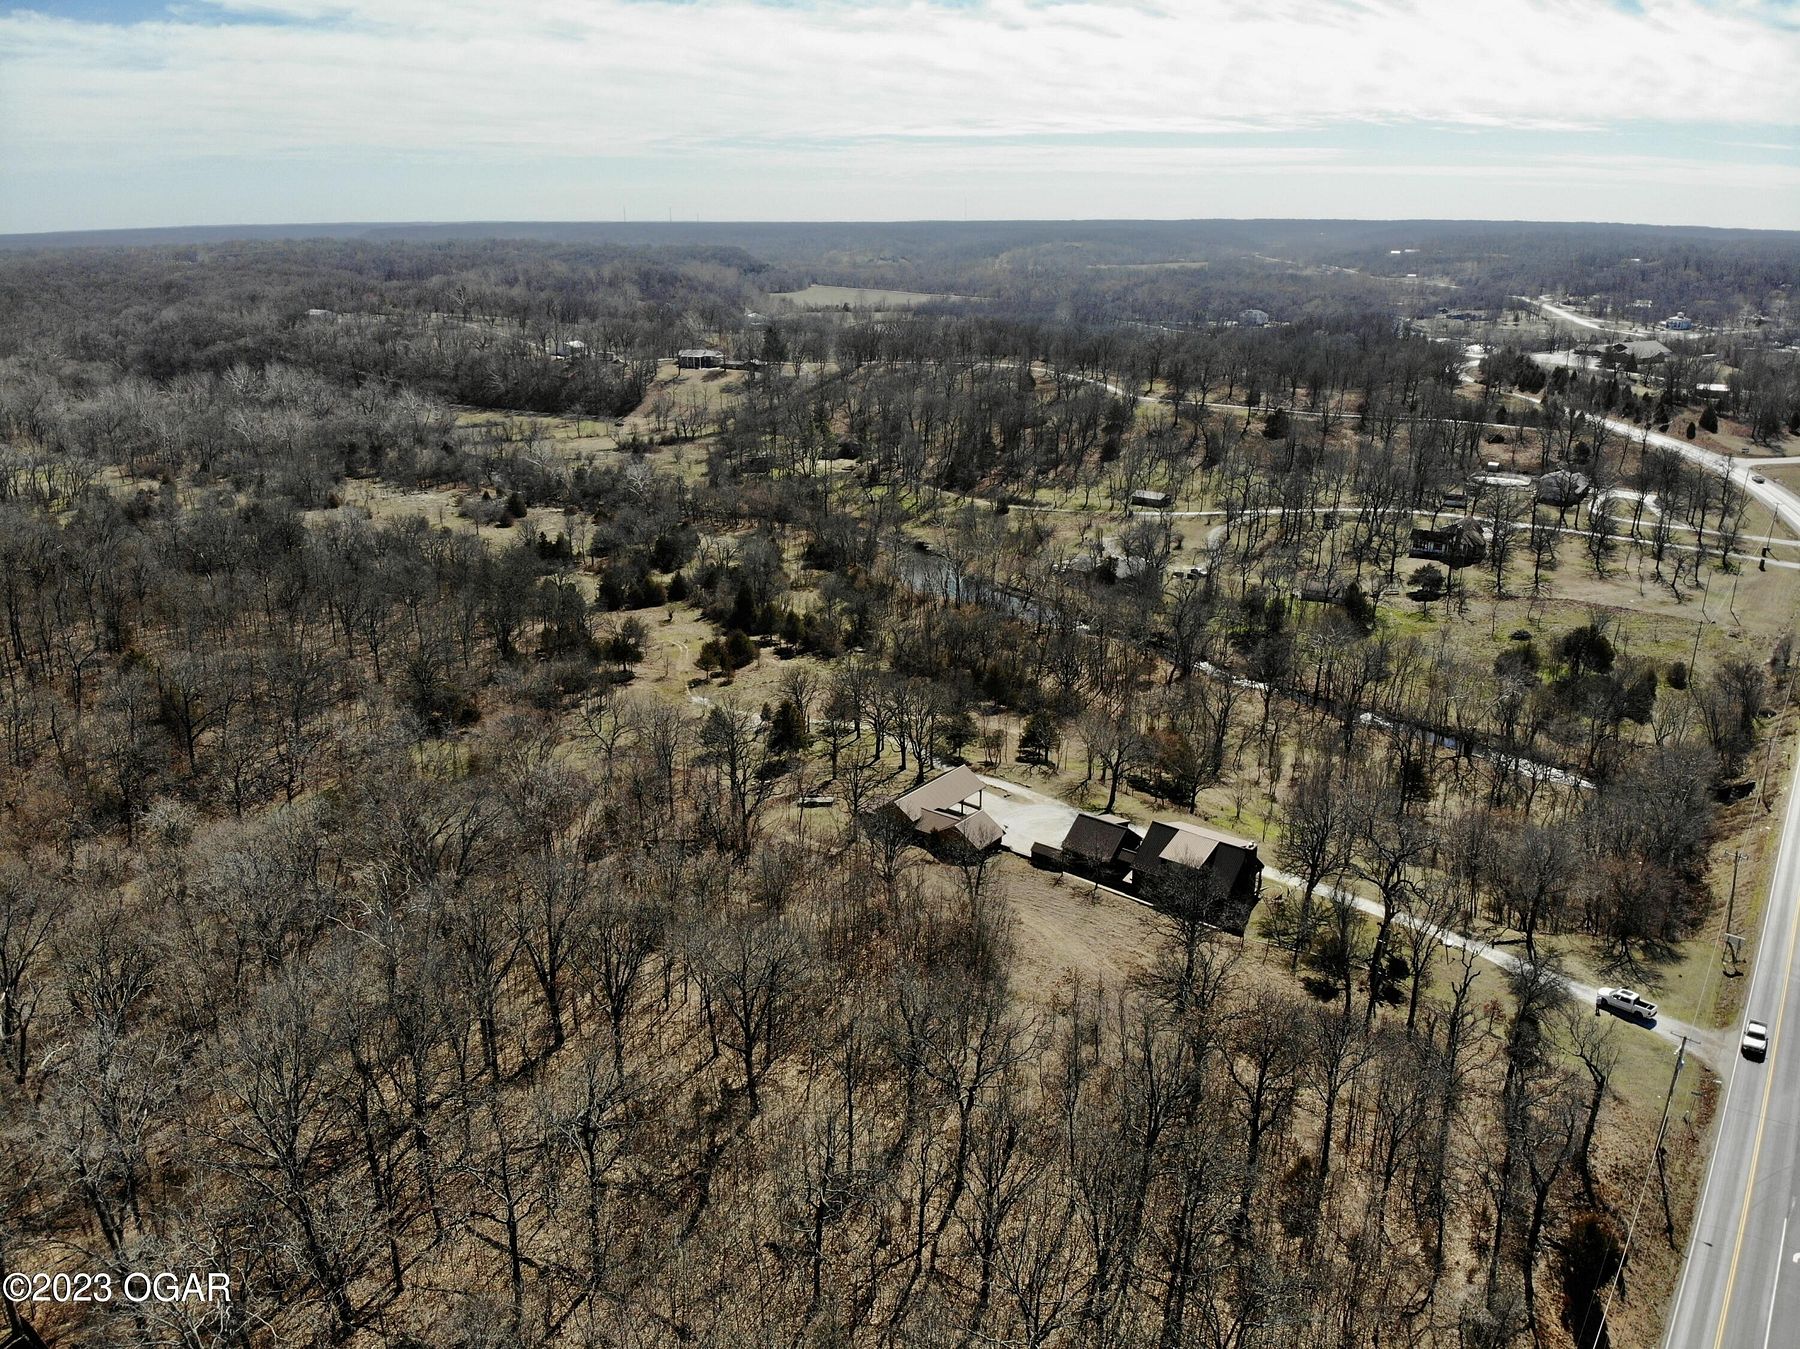 20 Acres of Commercial Land for Sale in Joplin, Missouri